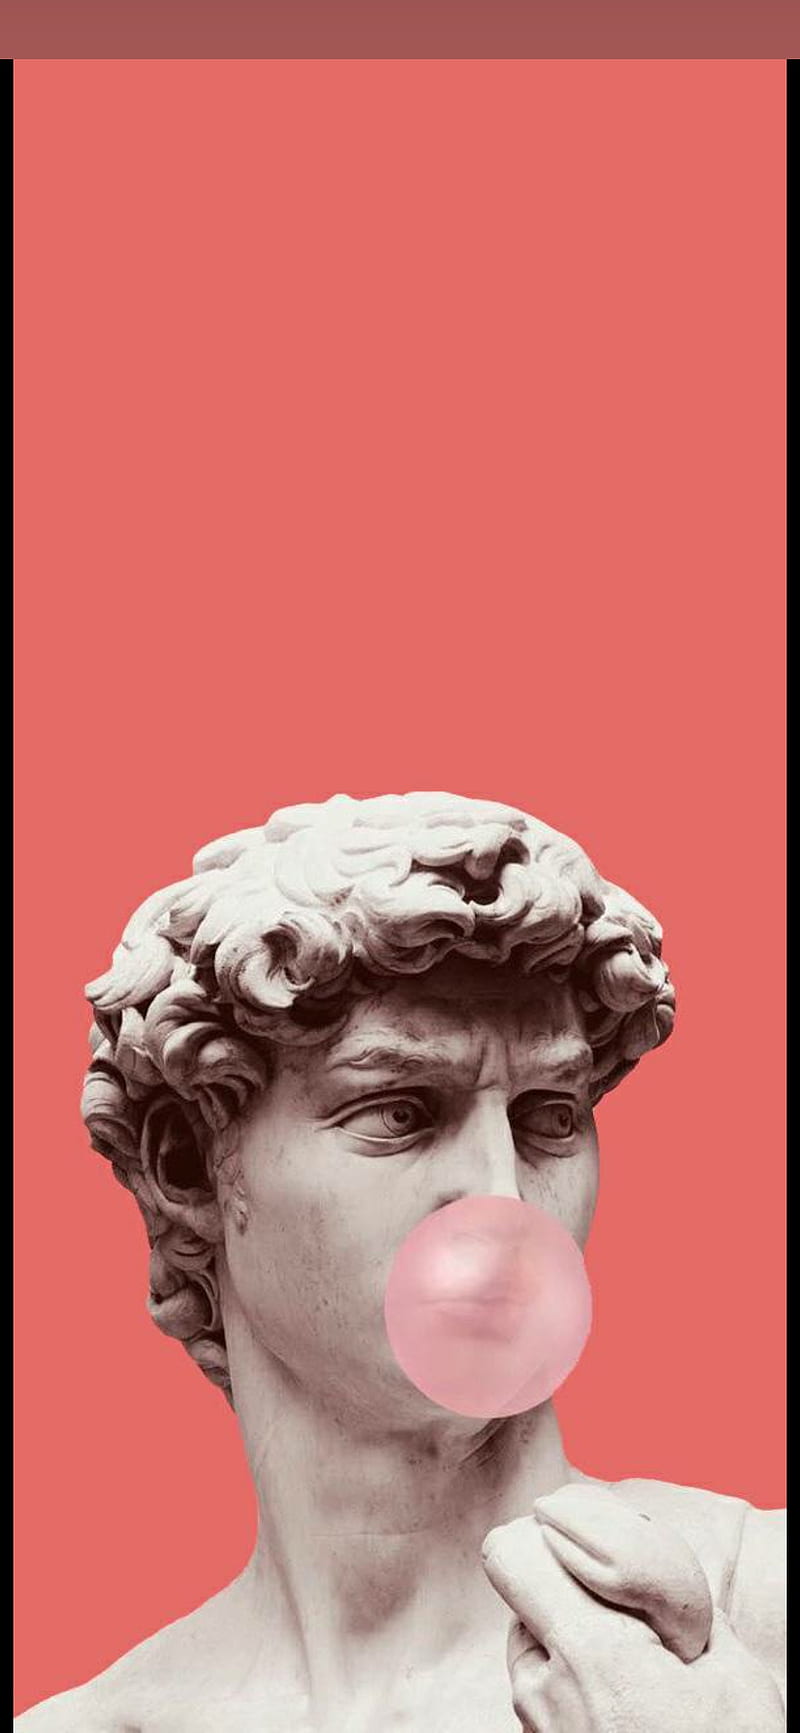 IPhone wallpaper of a statue blowing a bubble gum bubble - Greek statue